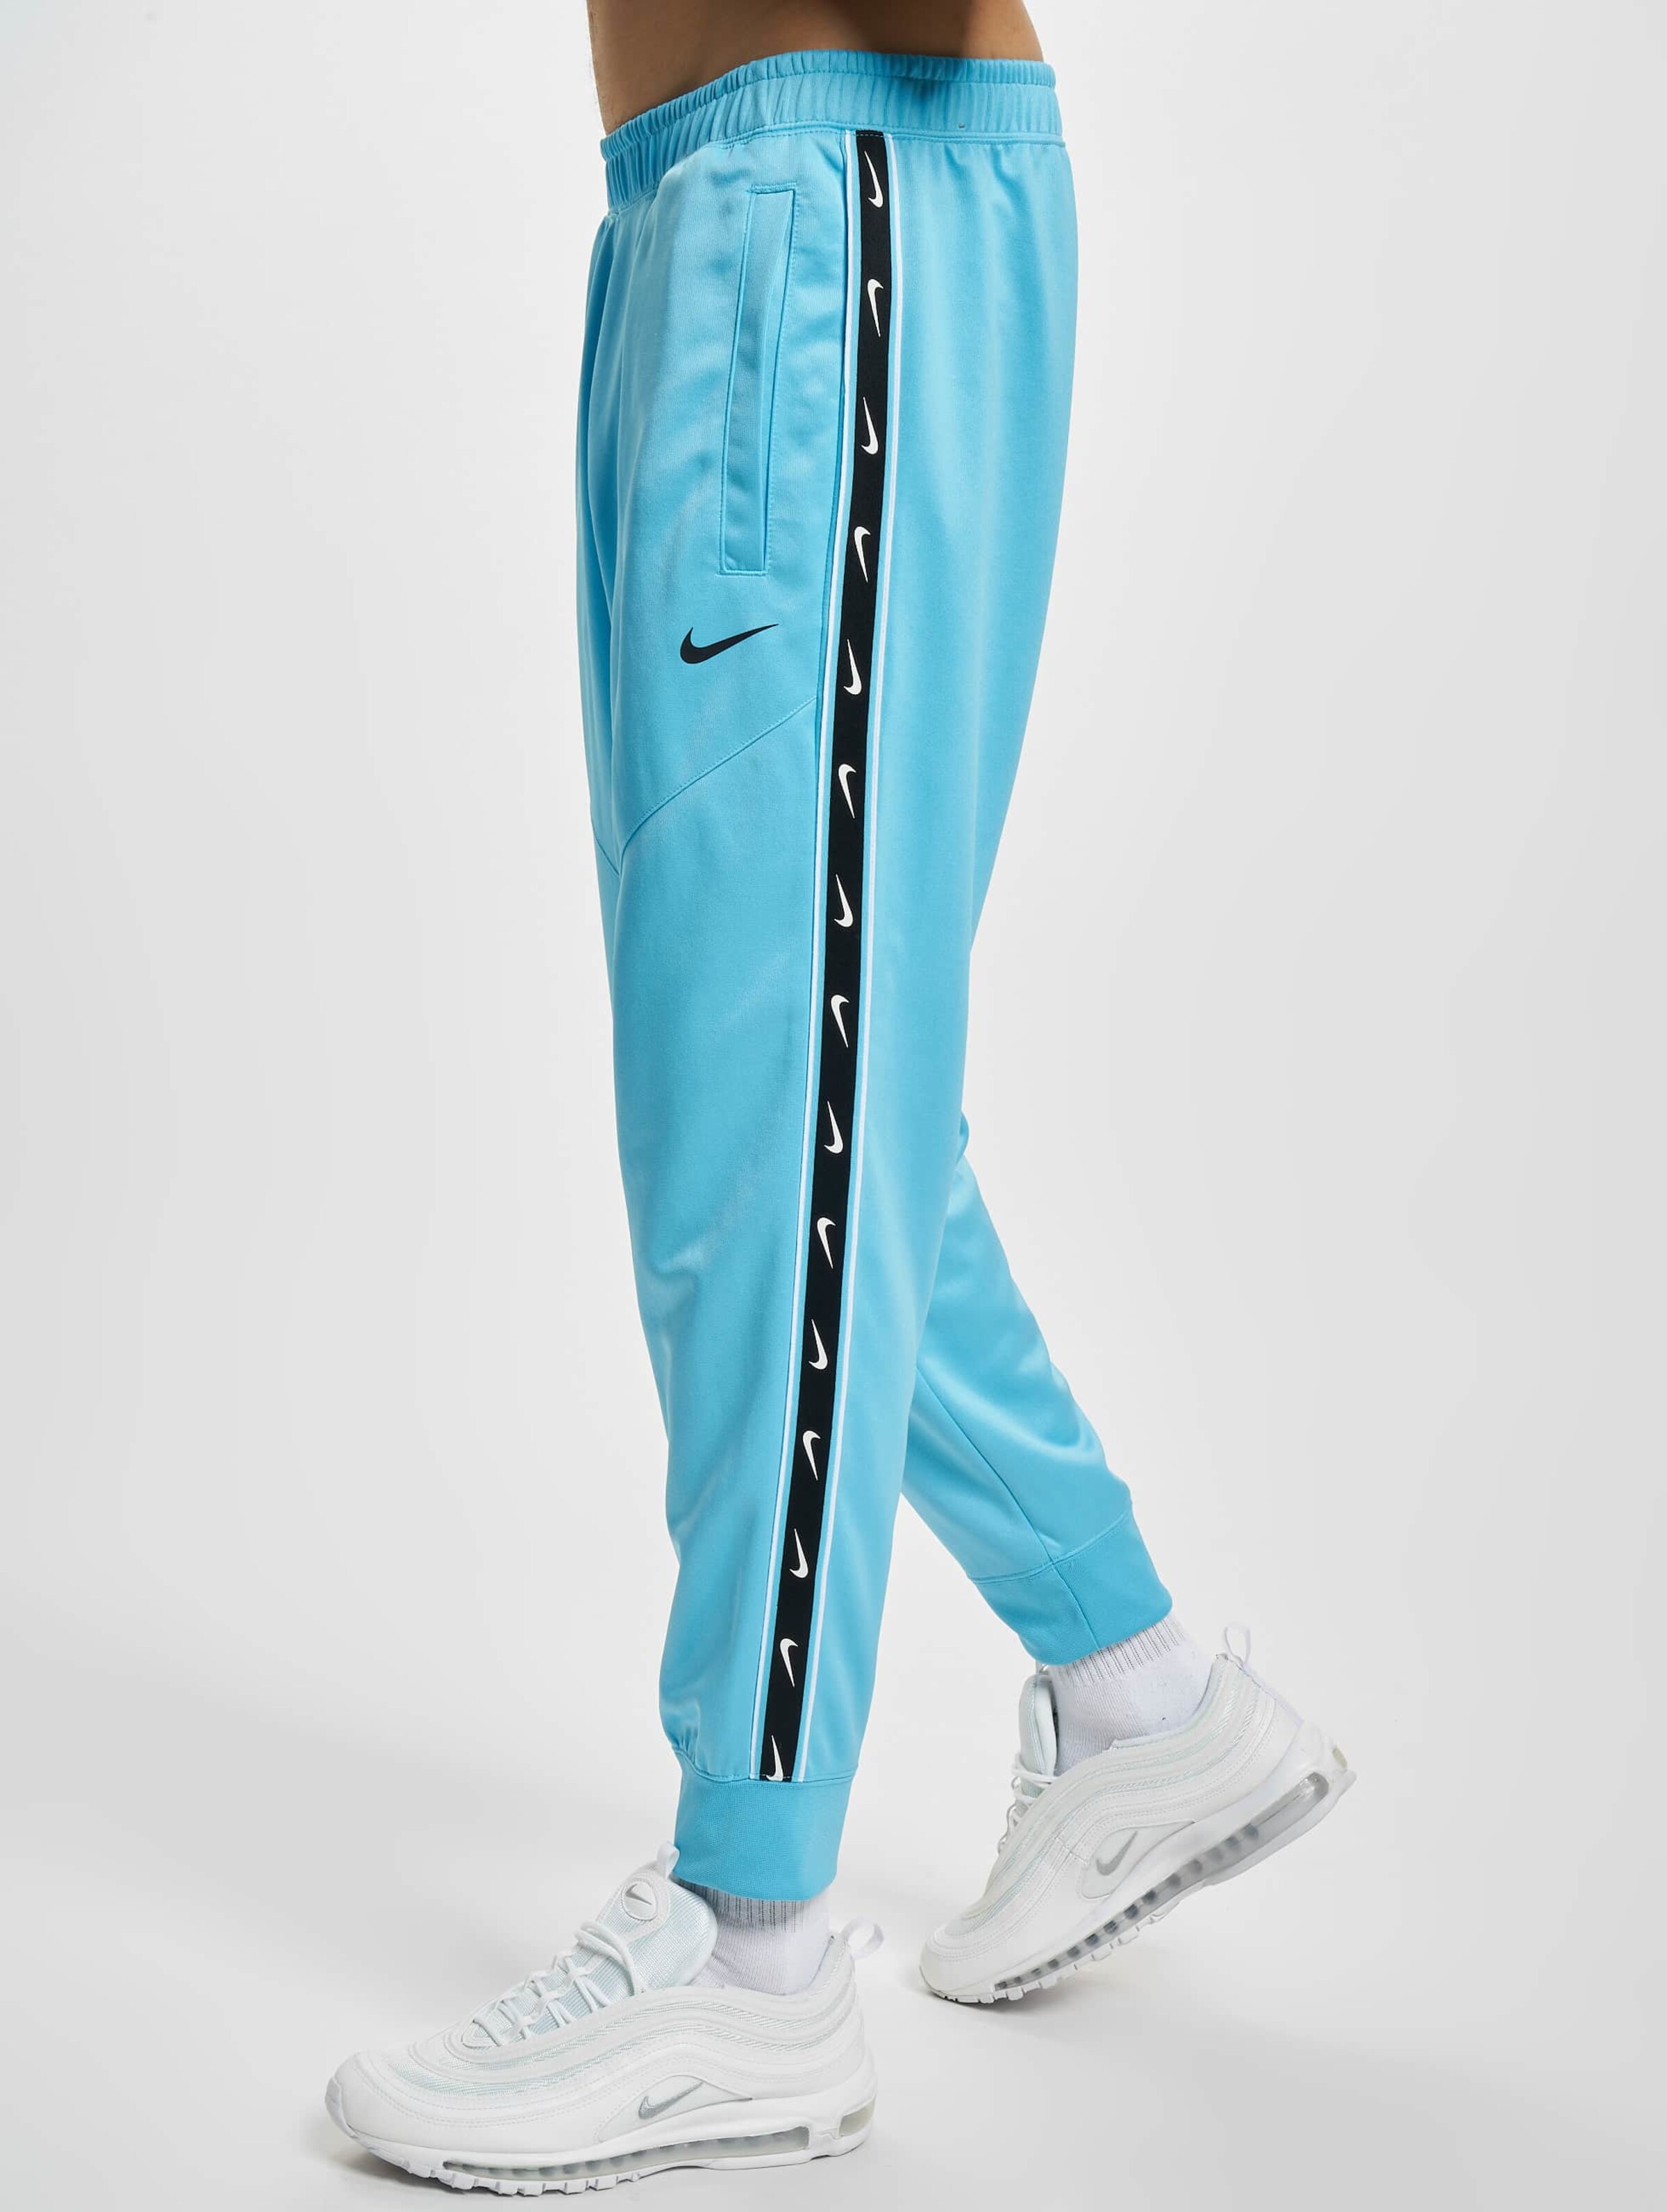 STAINS Nike Sportswear Woven Cuffed Track Pants Mens Large Joggers  DD5310-247 | eBay